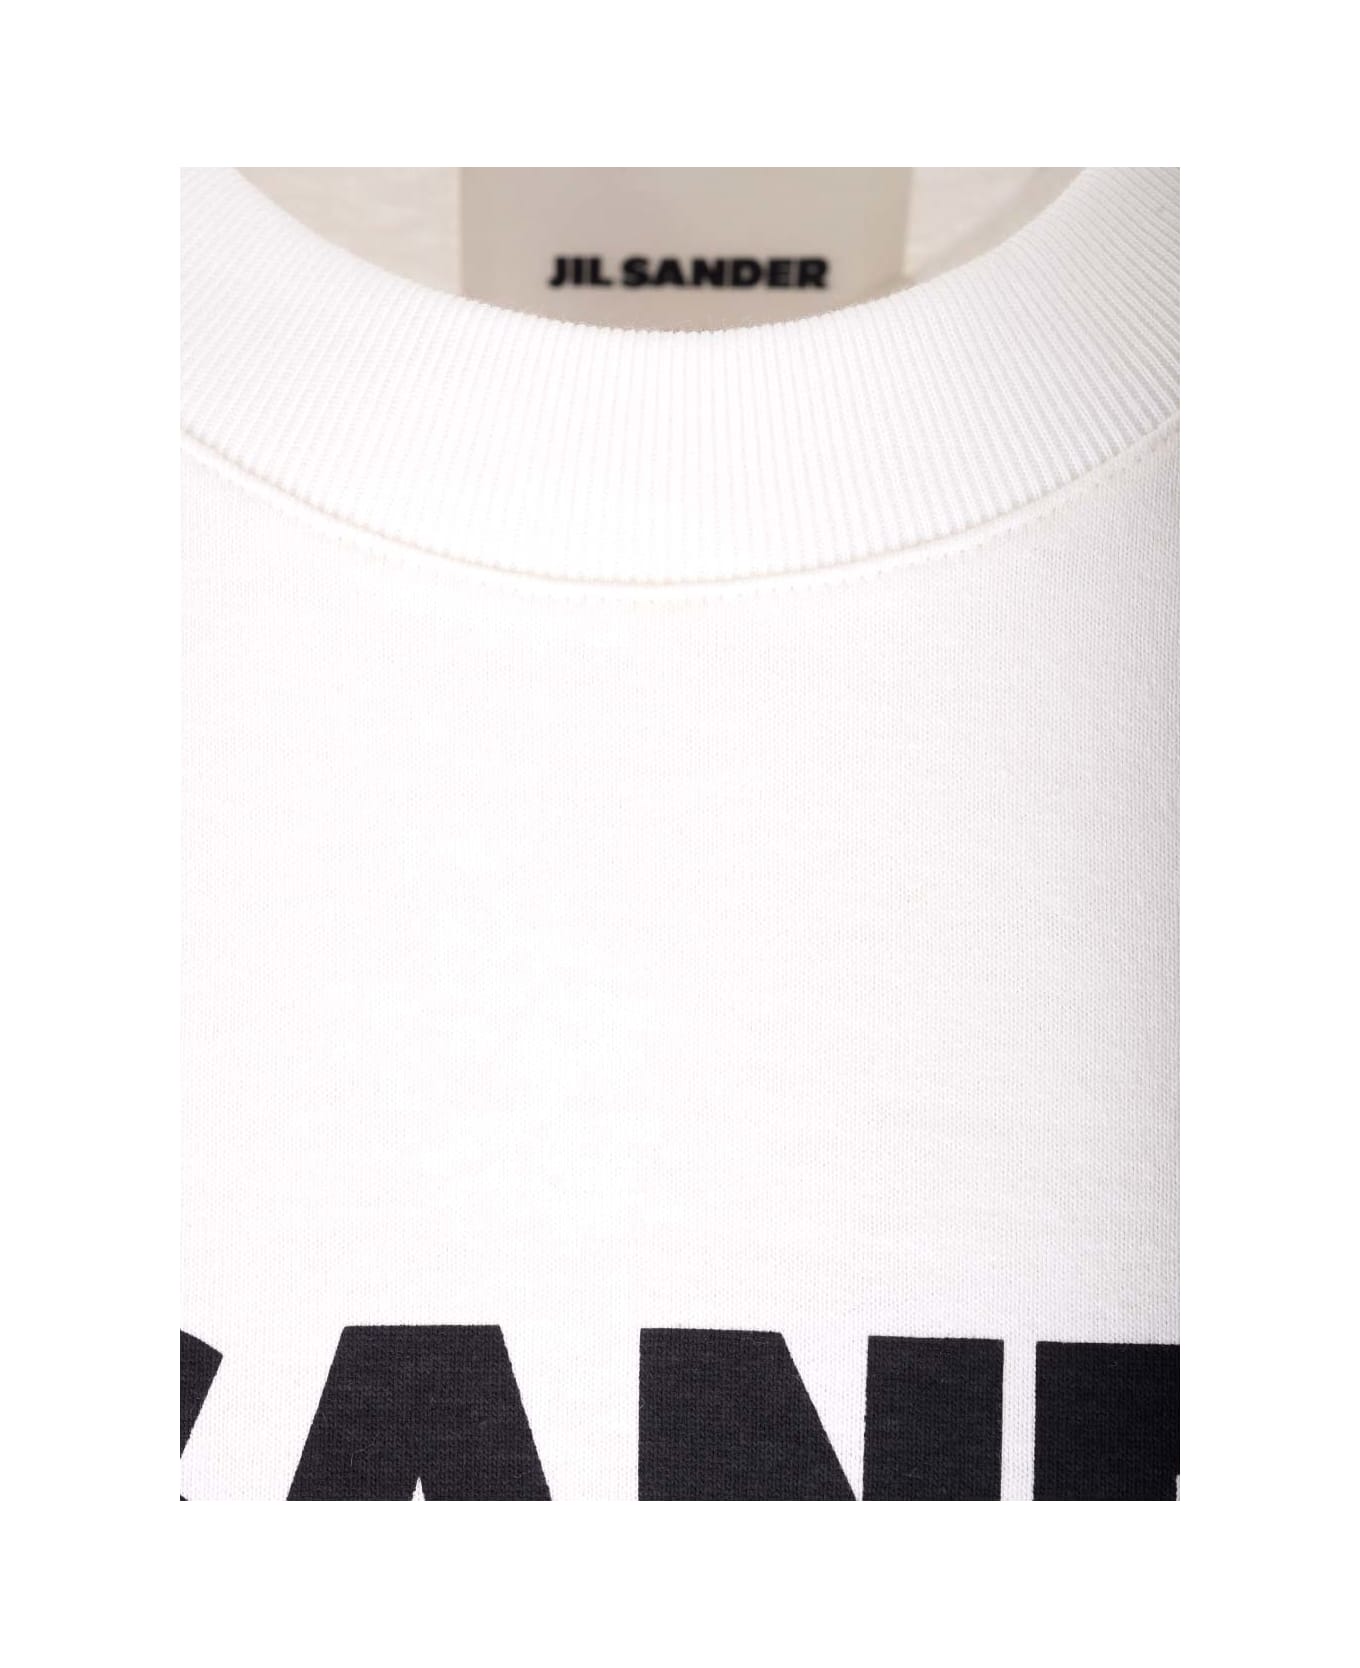 Jil Sander Signature T-shirt